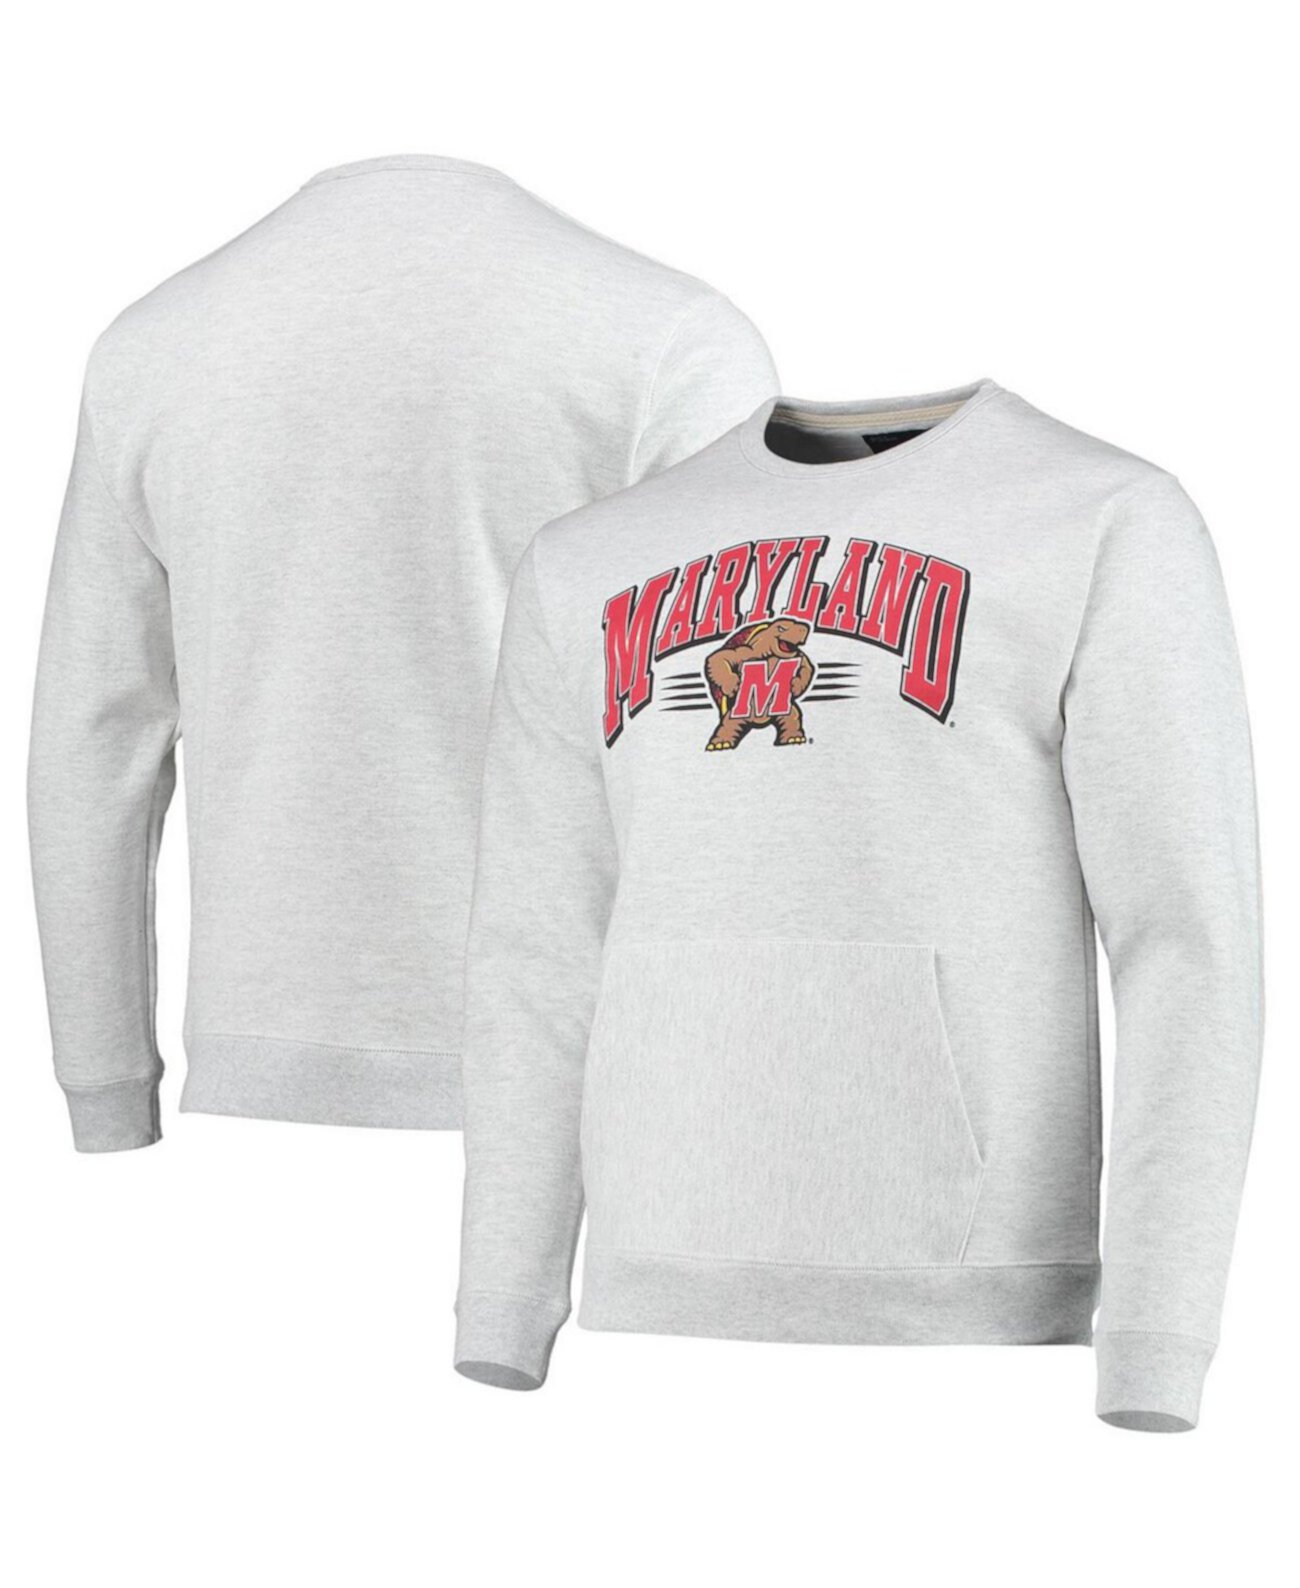 Мужская меланжевая серая толстовка с карманом Maryland Terrapins Upperclassman Pocket Pullover Sweatshirt League Collegiate Wear